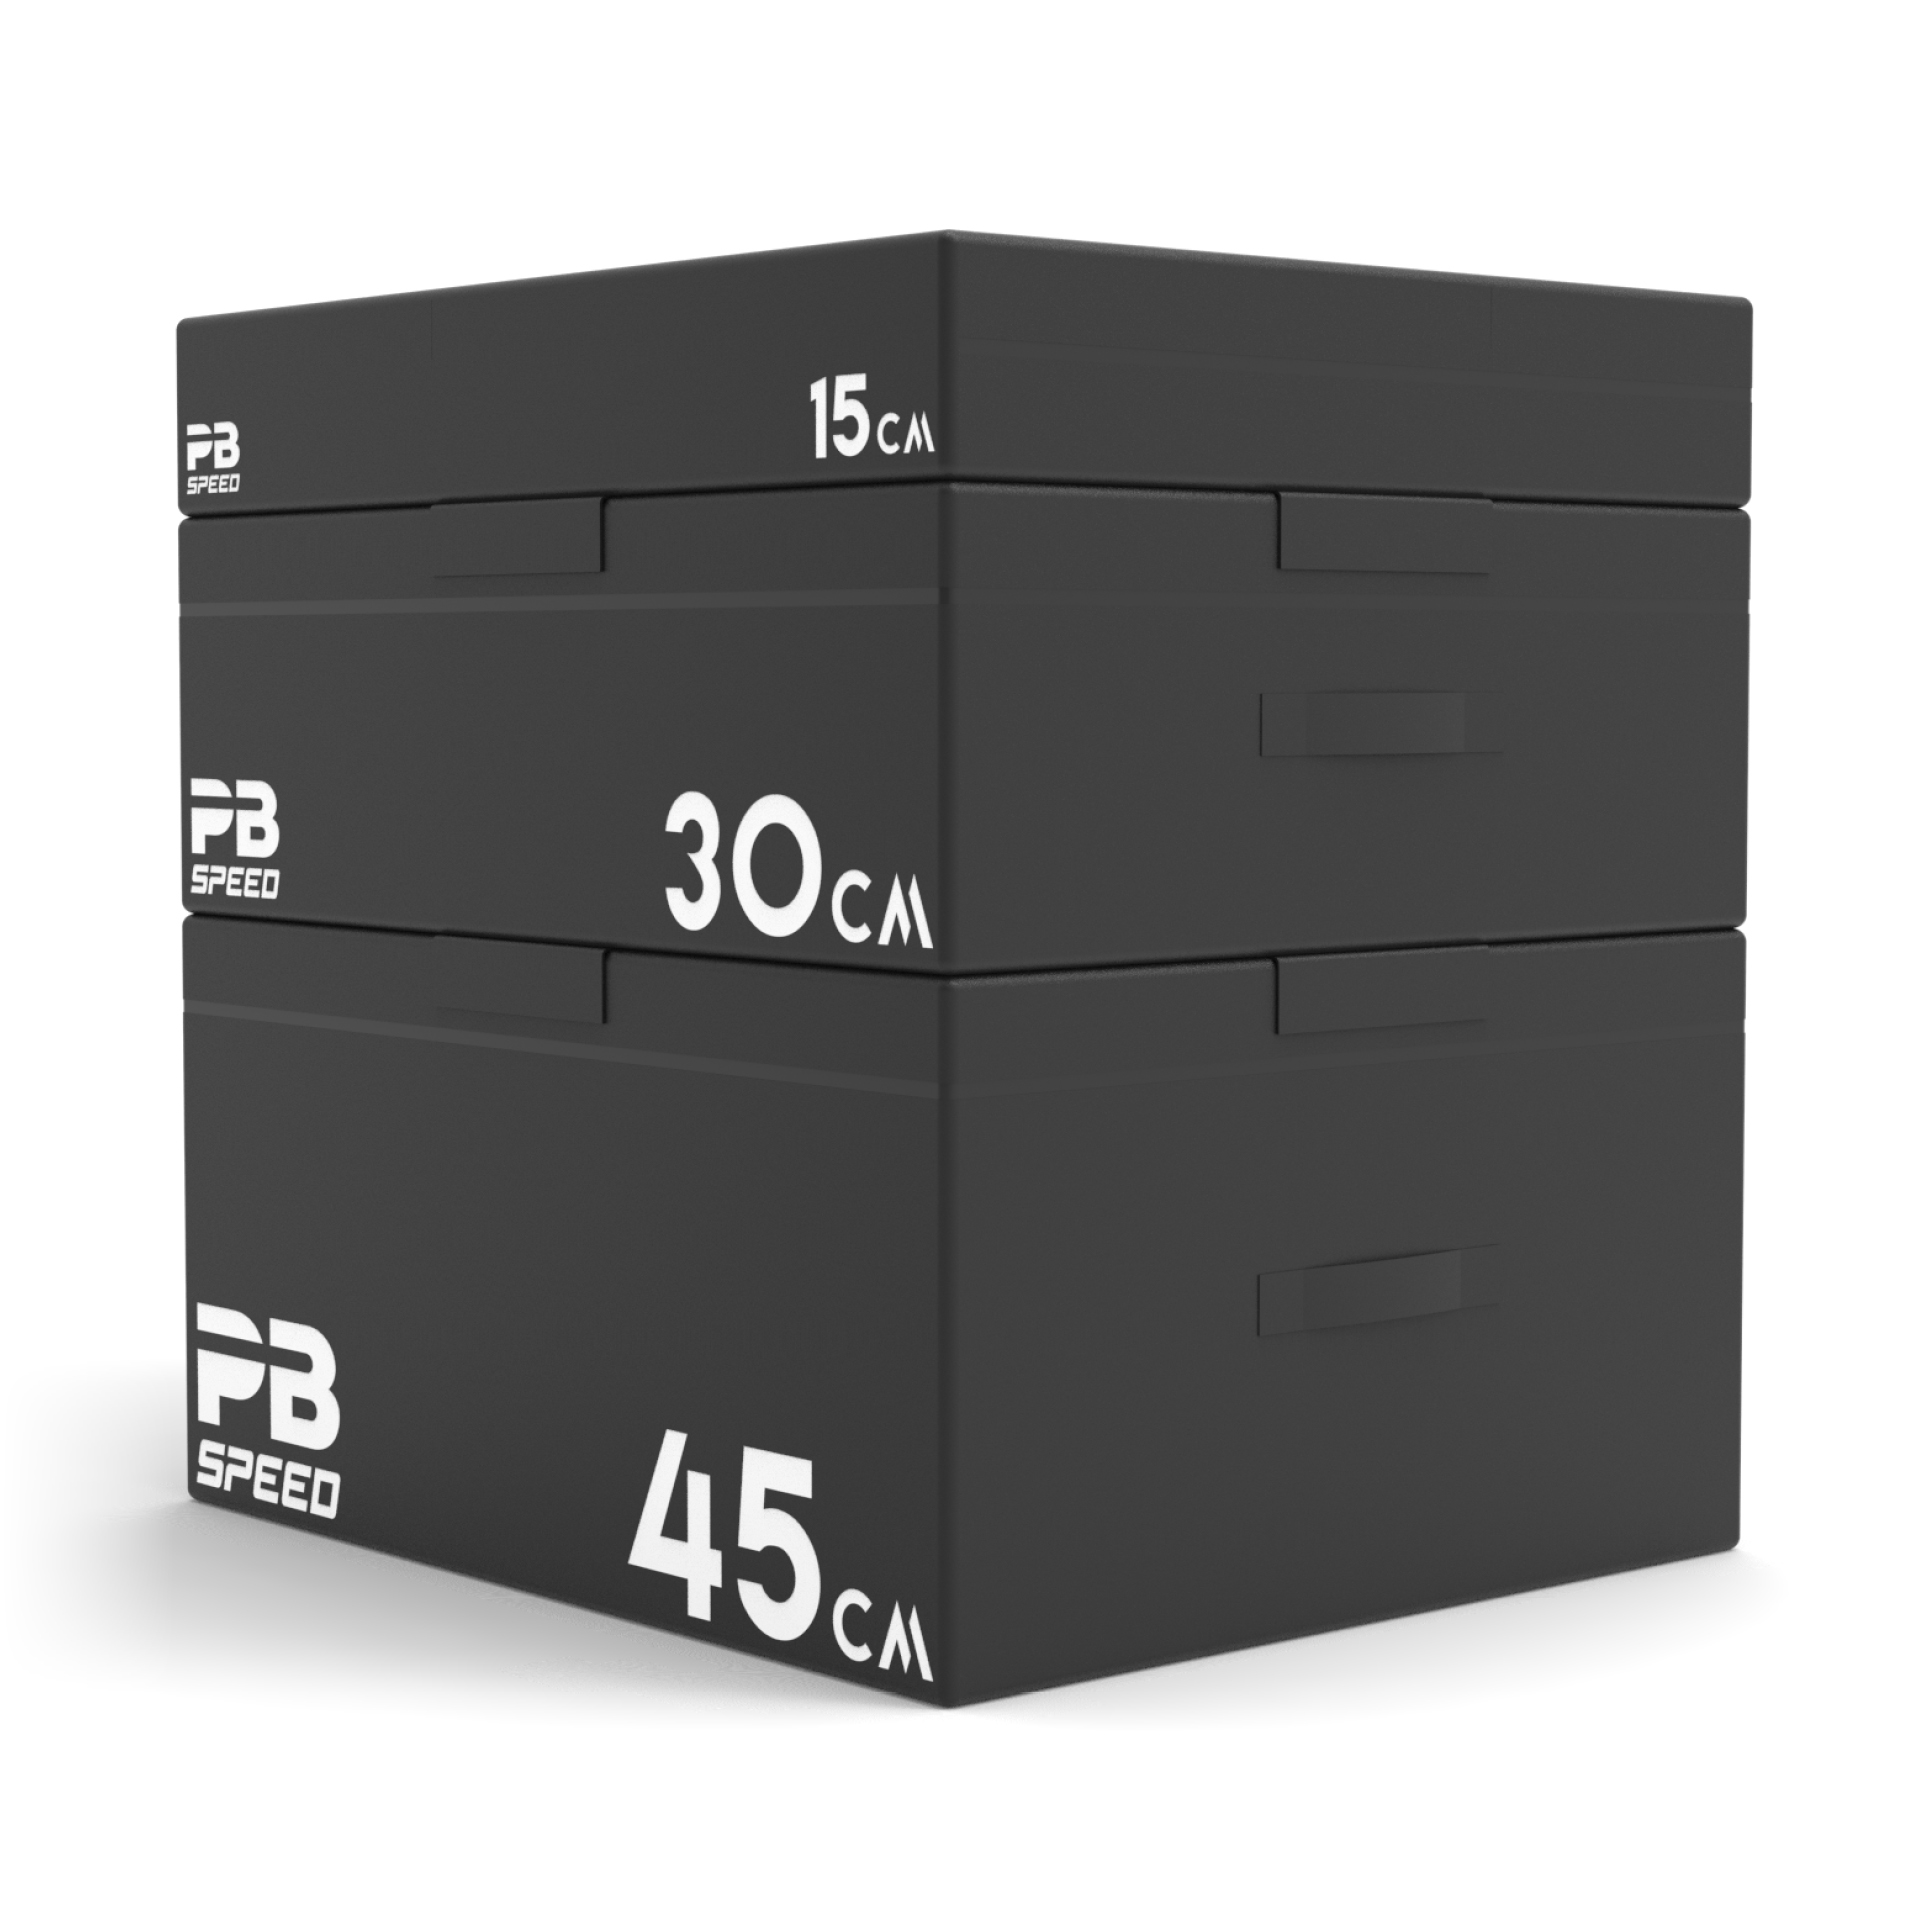 PB Speed Soft Plyo Box black - 15, 30 and 45 cm (set)